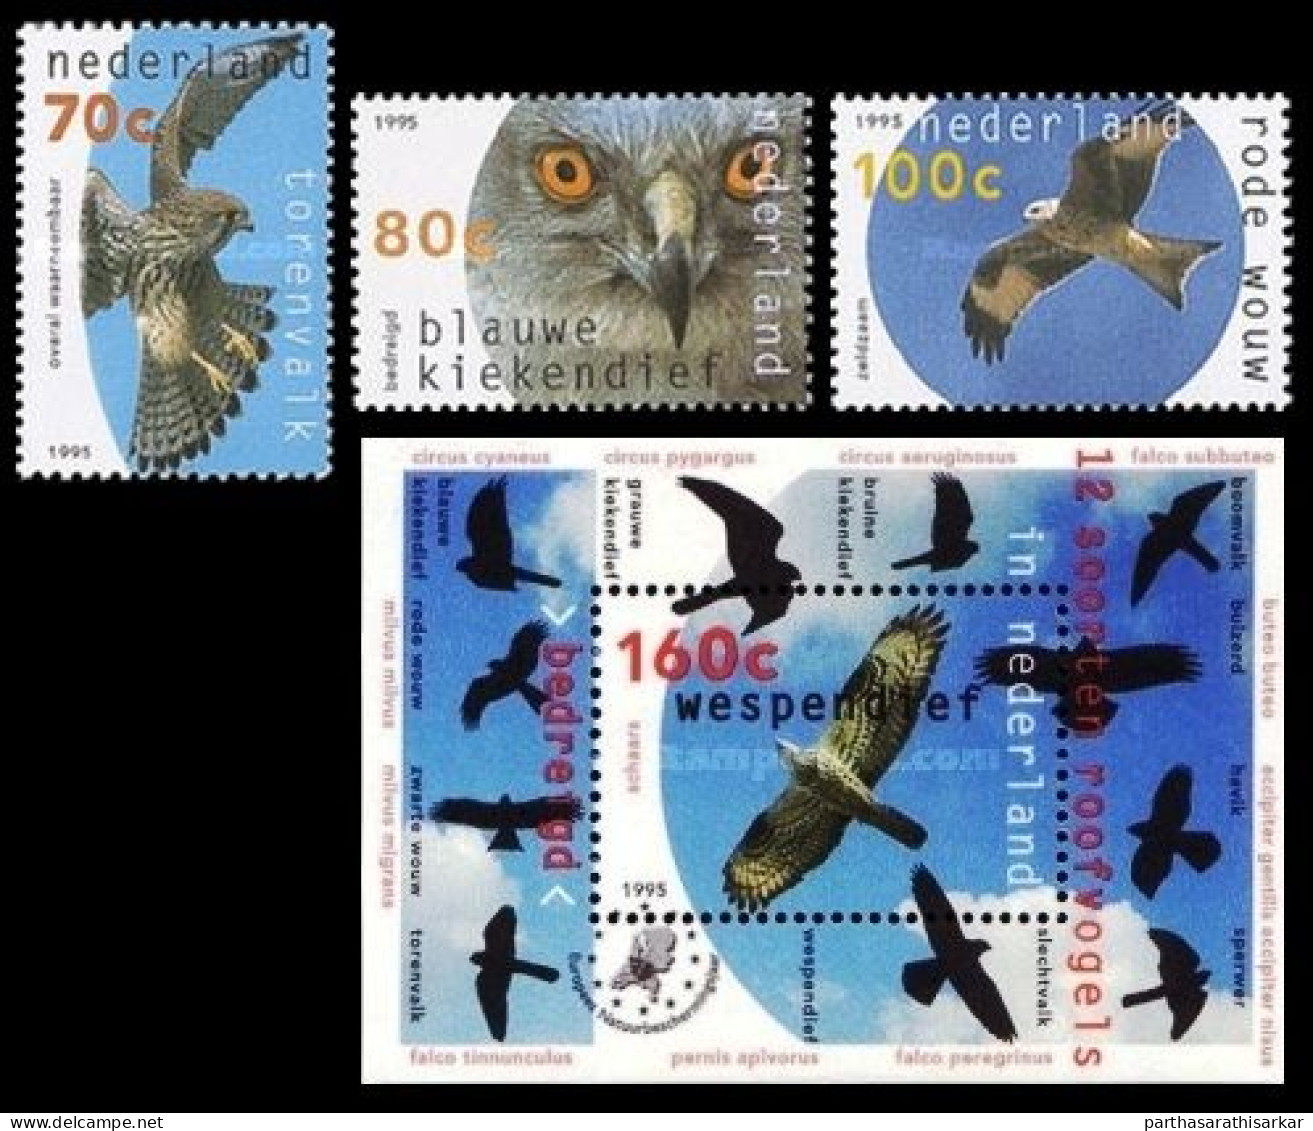 NETHERLANDS 1995 BIRDS OF PREY COMPLETE SET WITH MINIATURE SHEET MS MNH - Eagles & Birds Of Prey